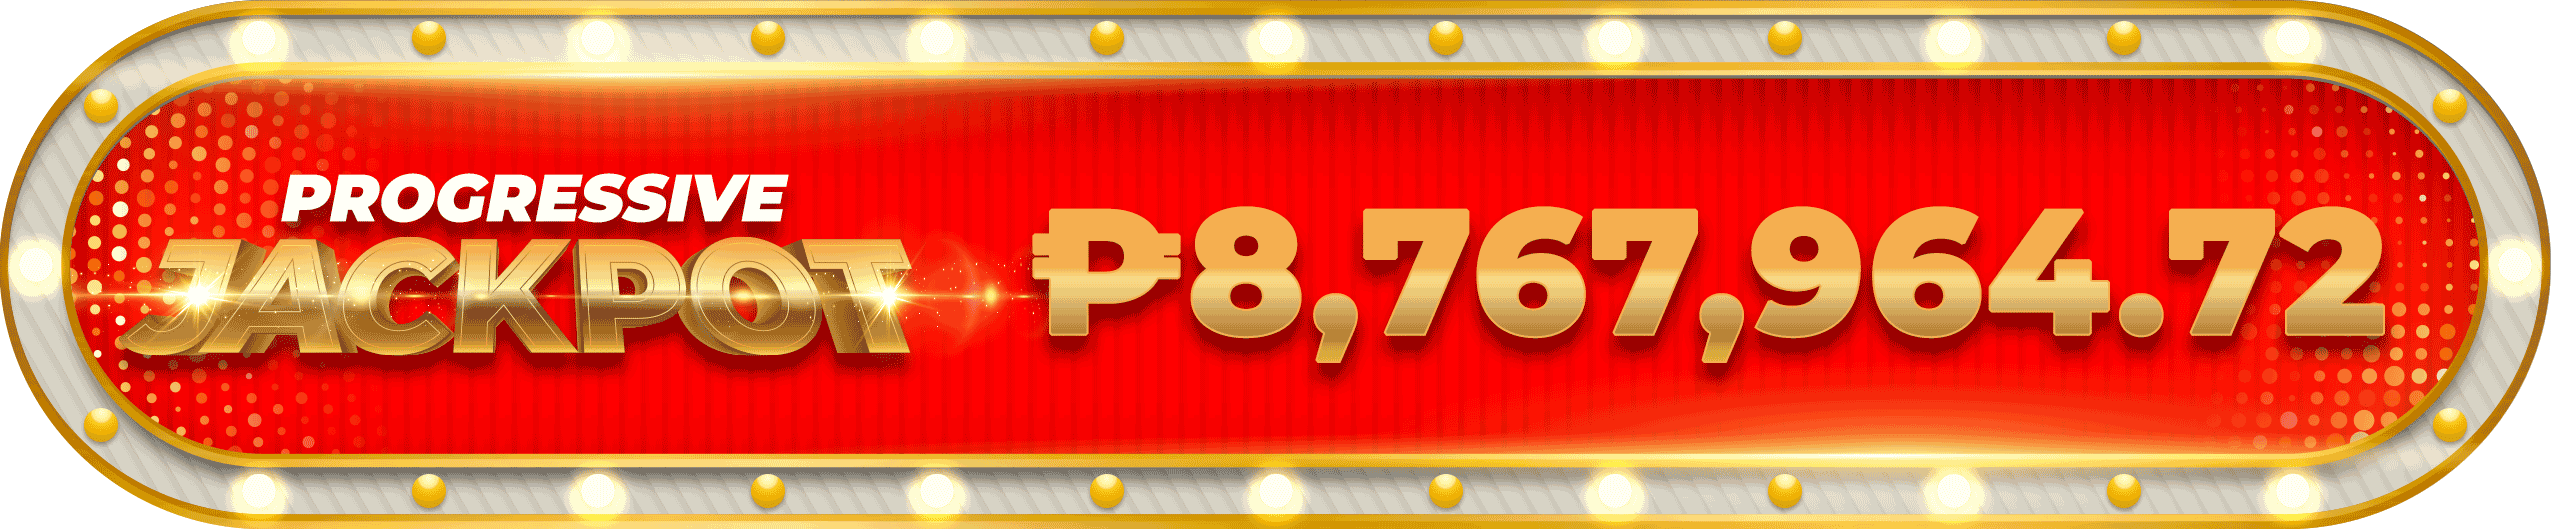 PH MCW Casino Philippines Progressive Jackpot